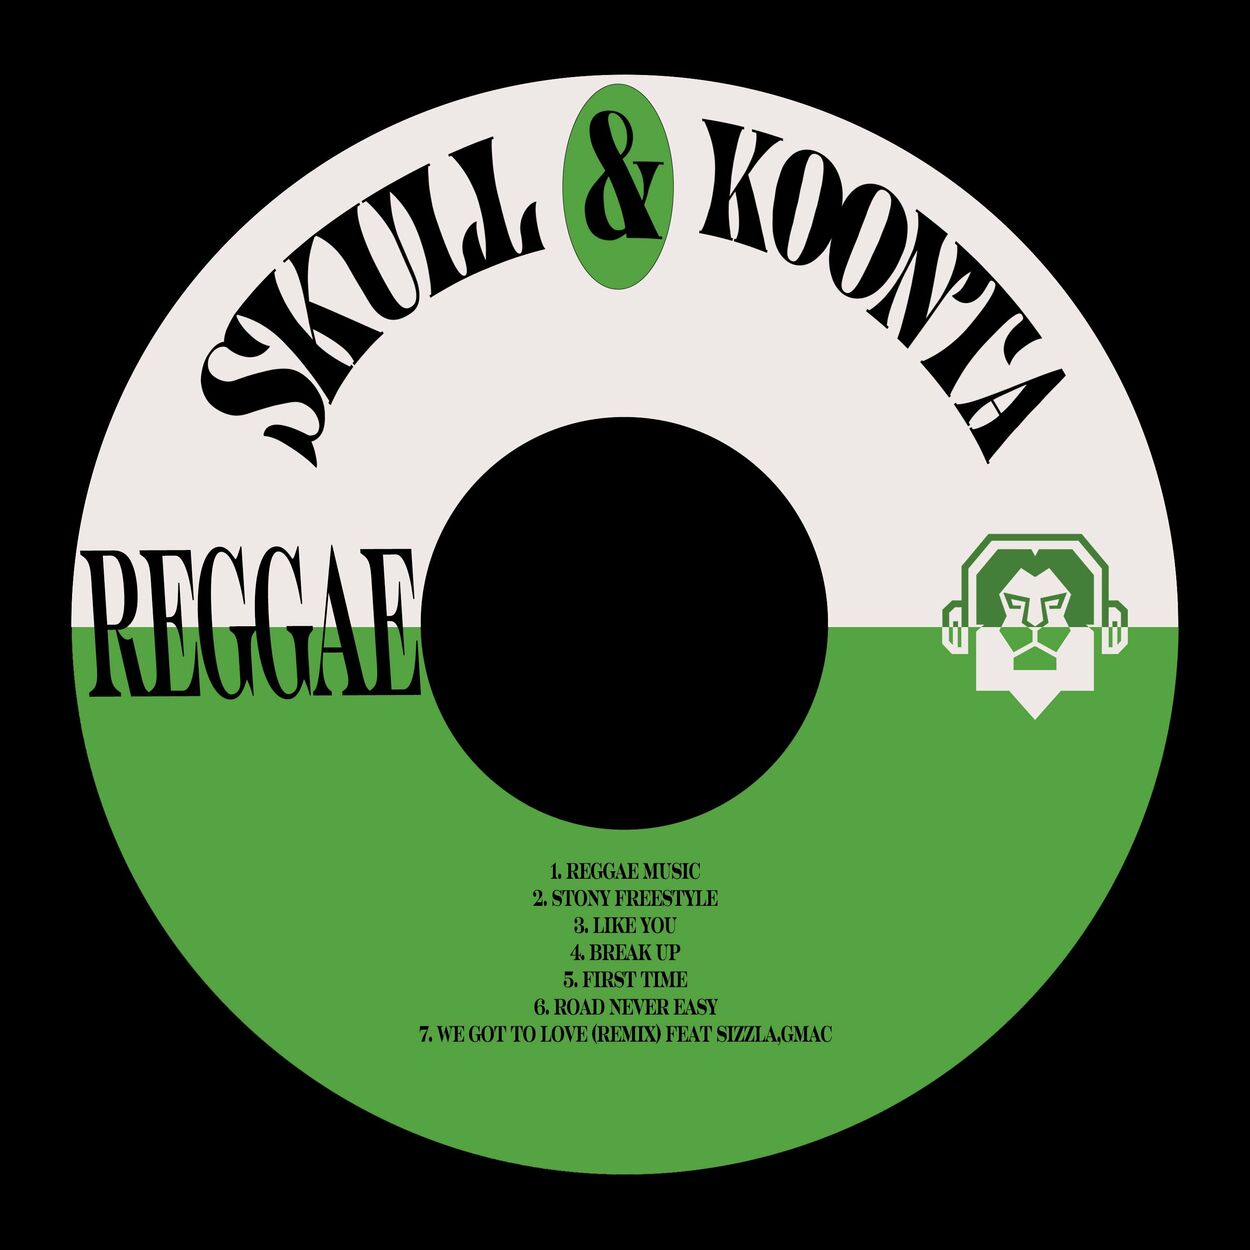 Skull, Koonta – REGGAE – EP